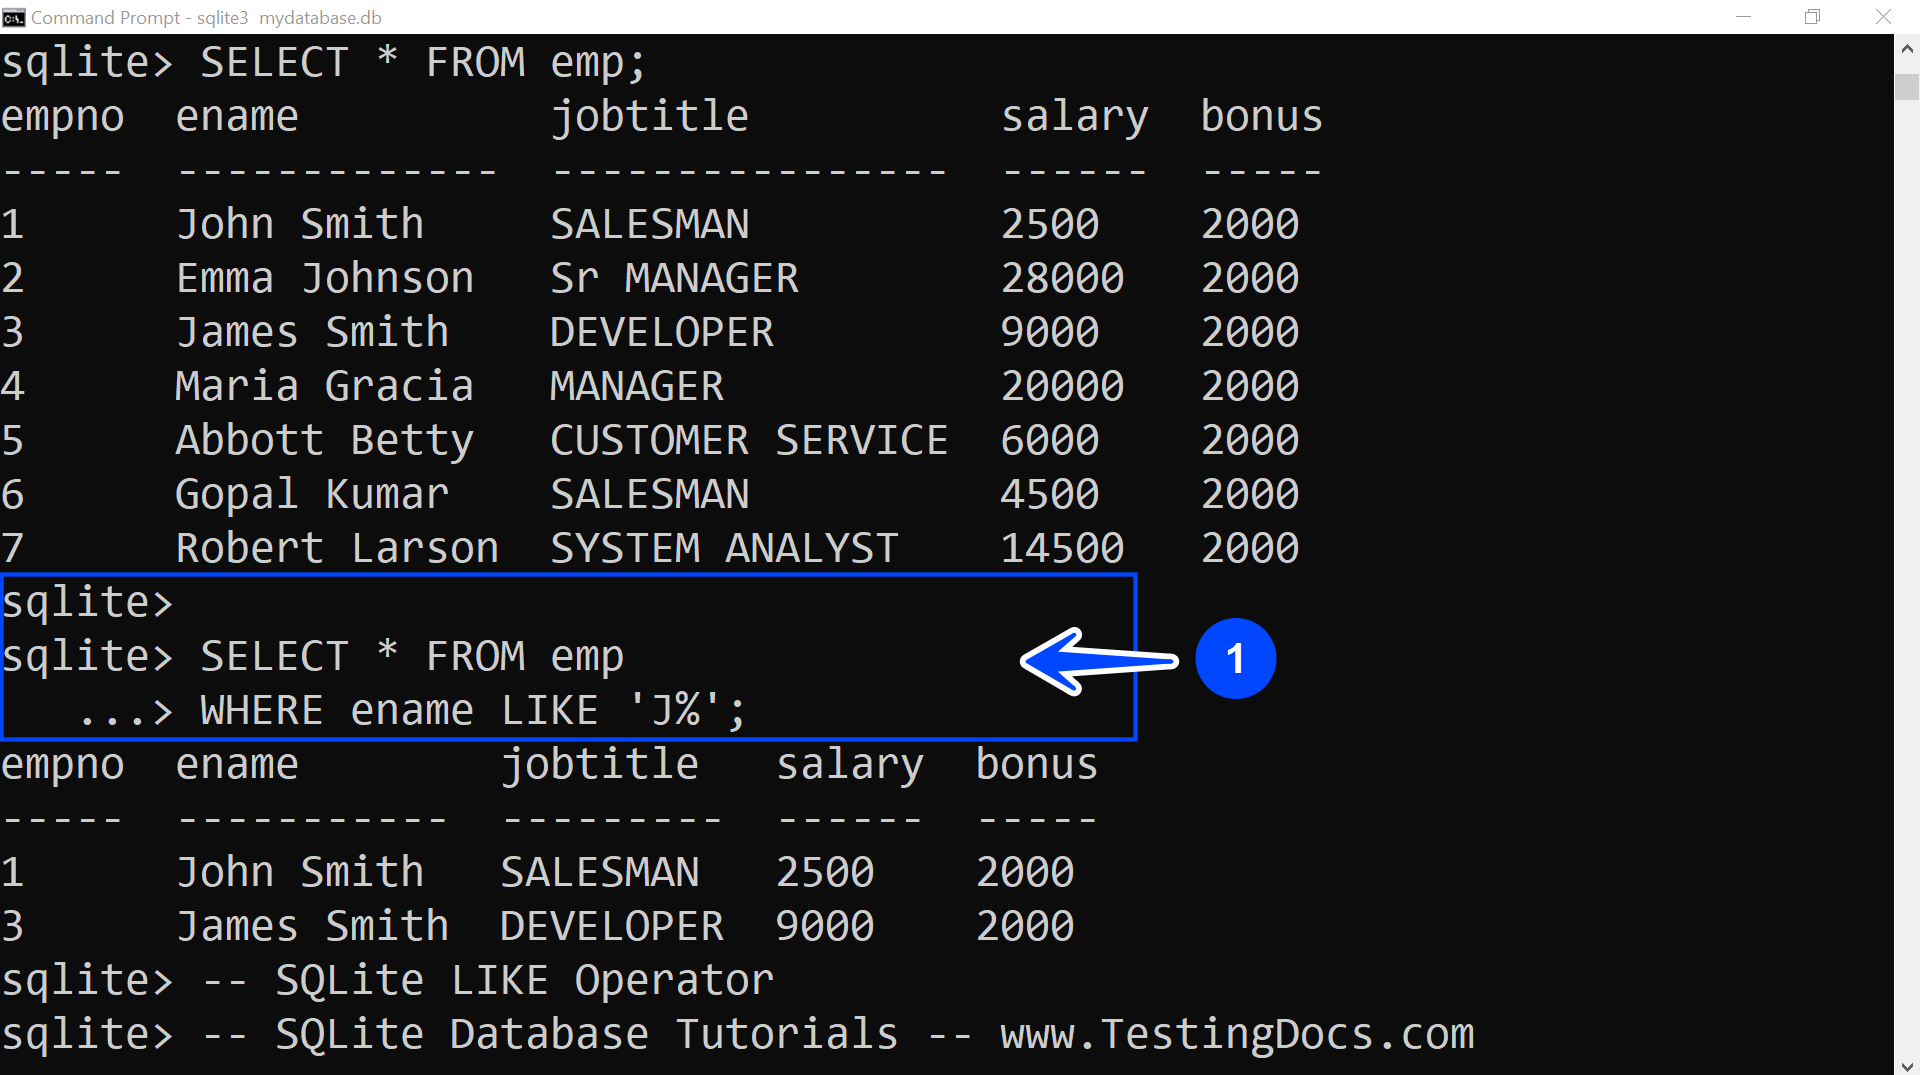 SQLite LIKE Operator